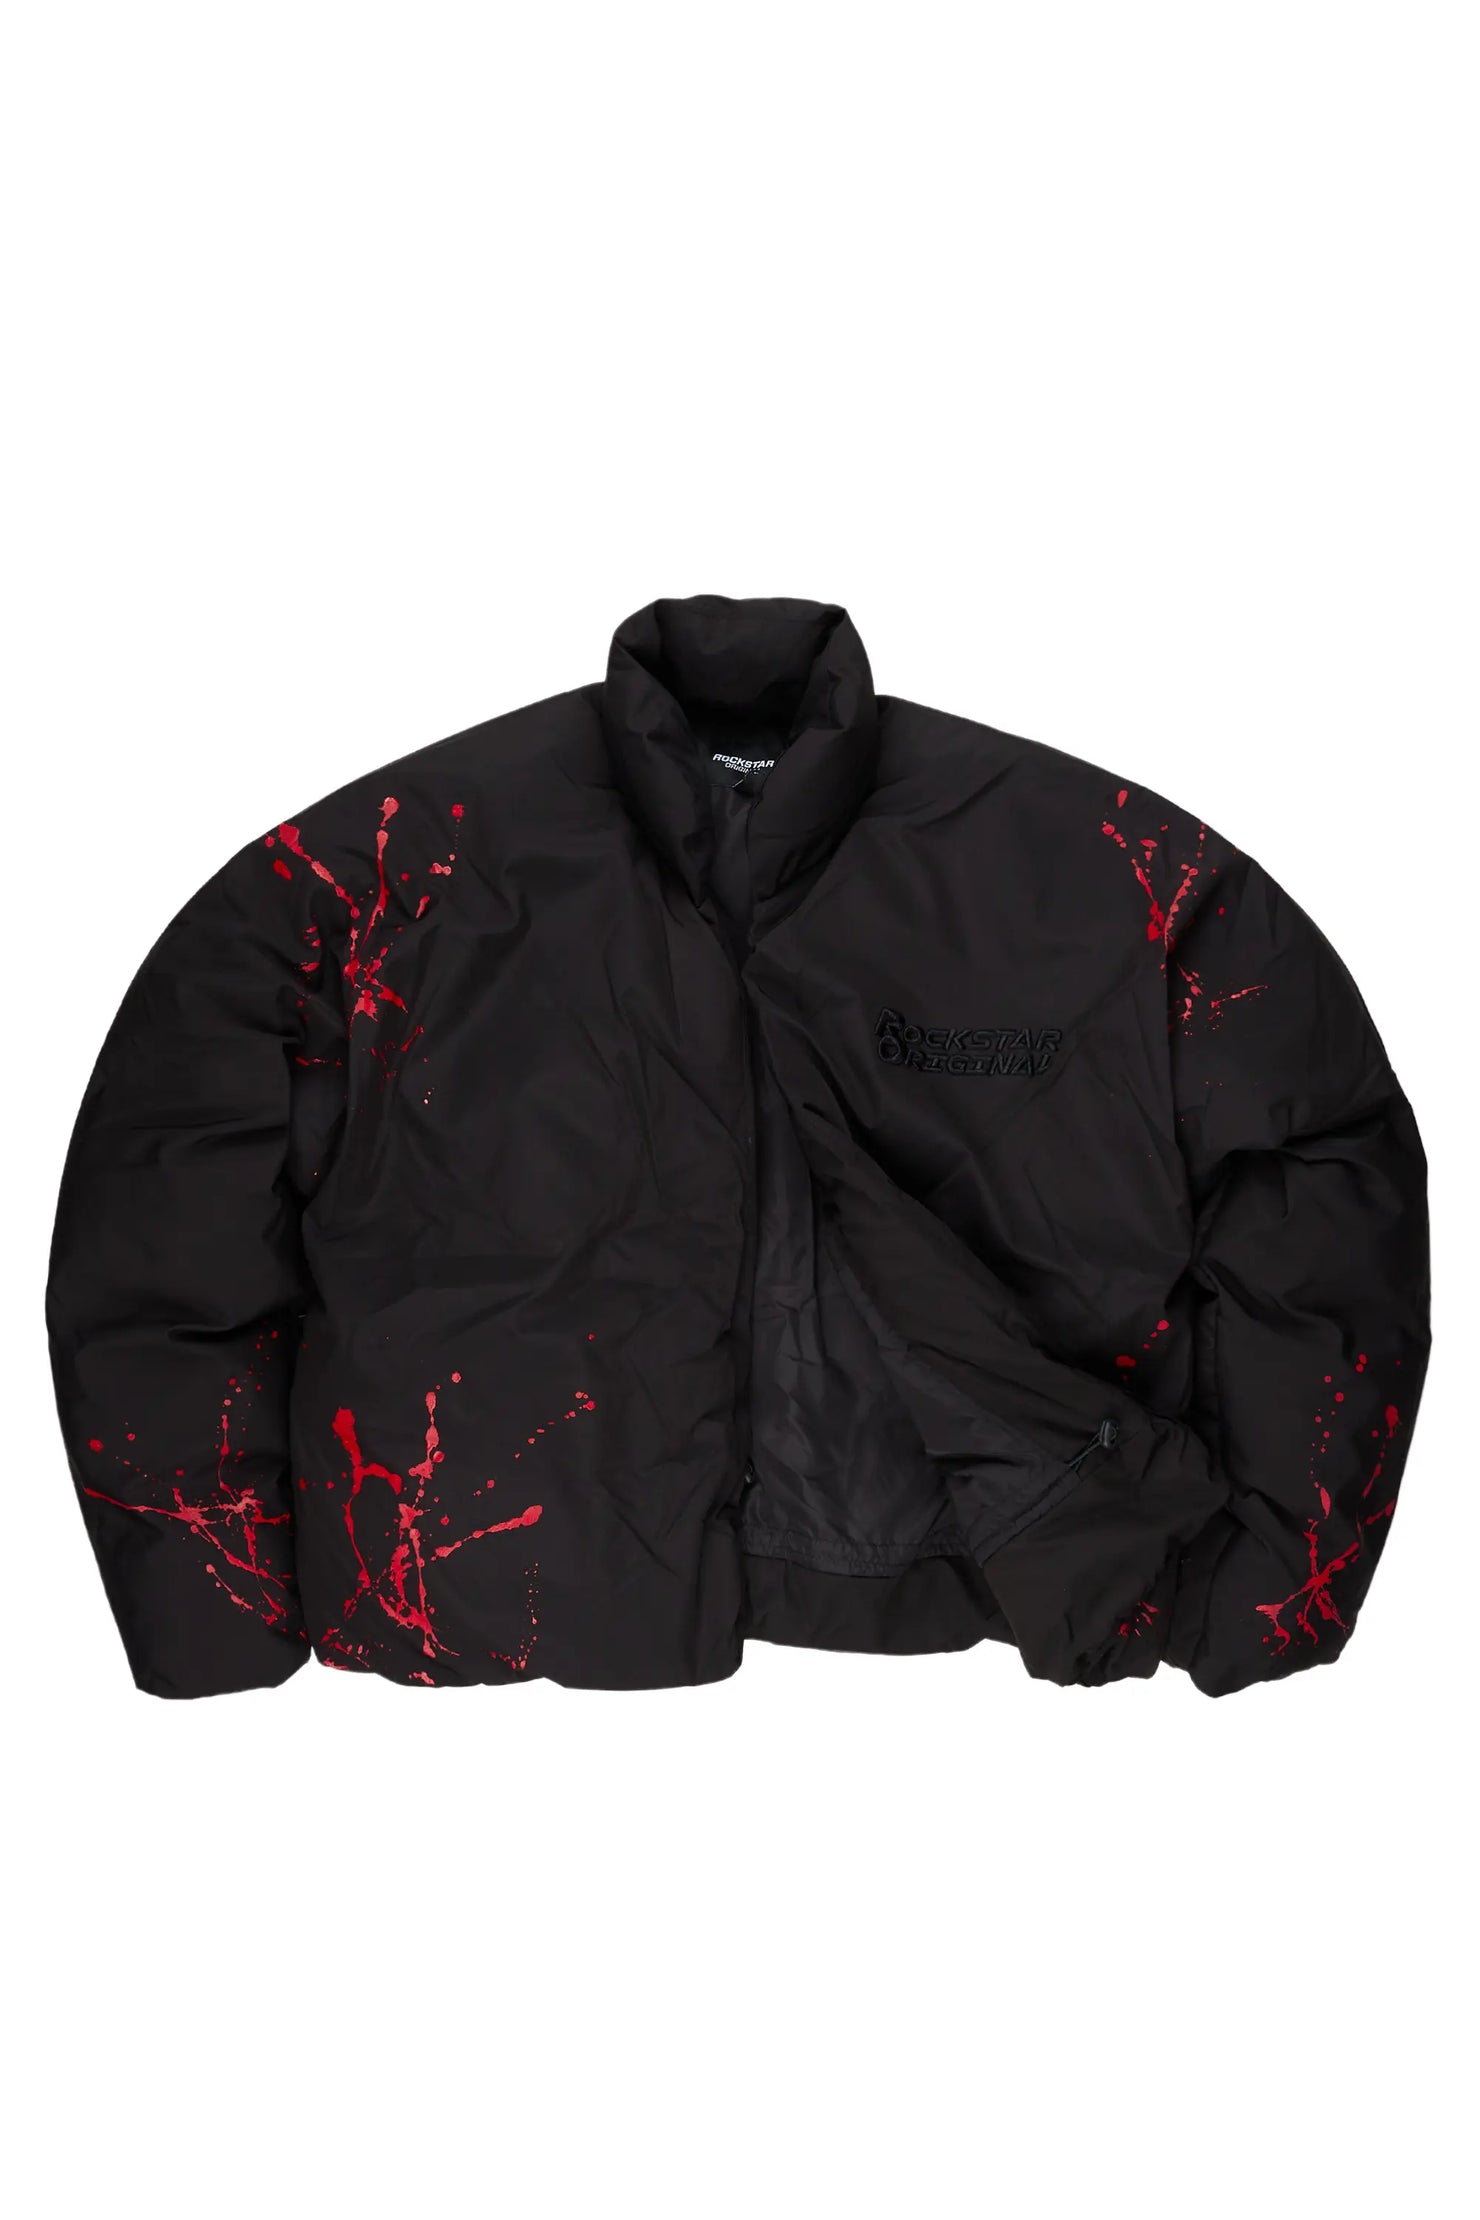 Rabbie Black/Red Puffer Jacket